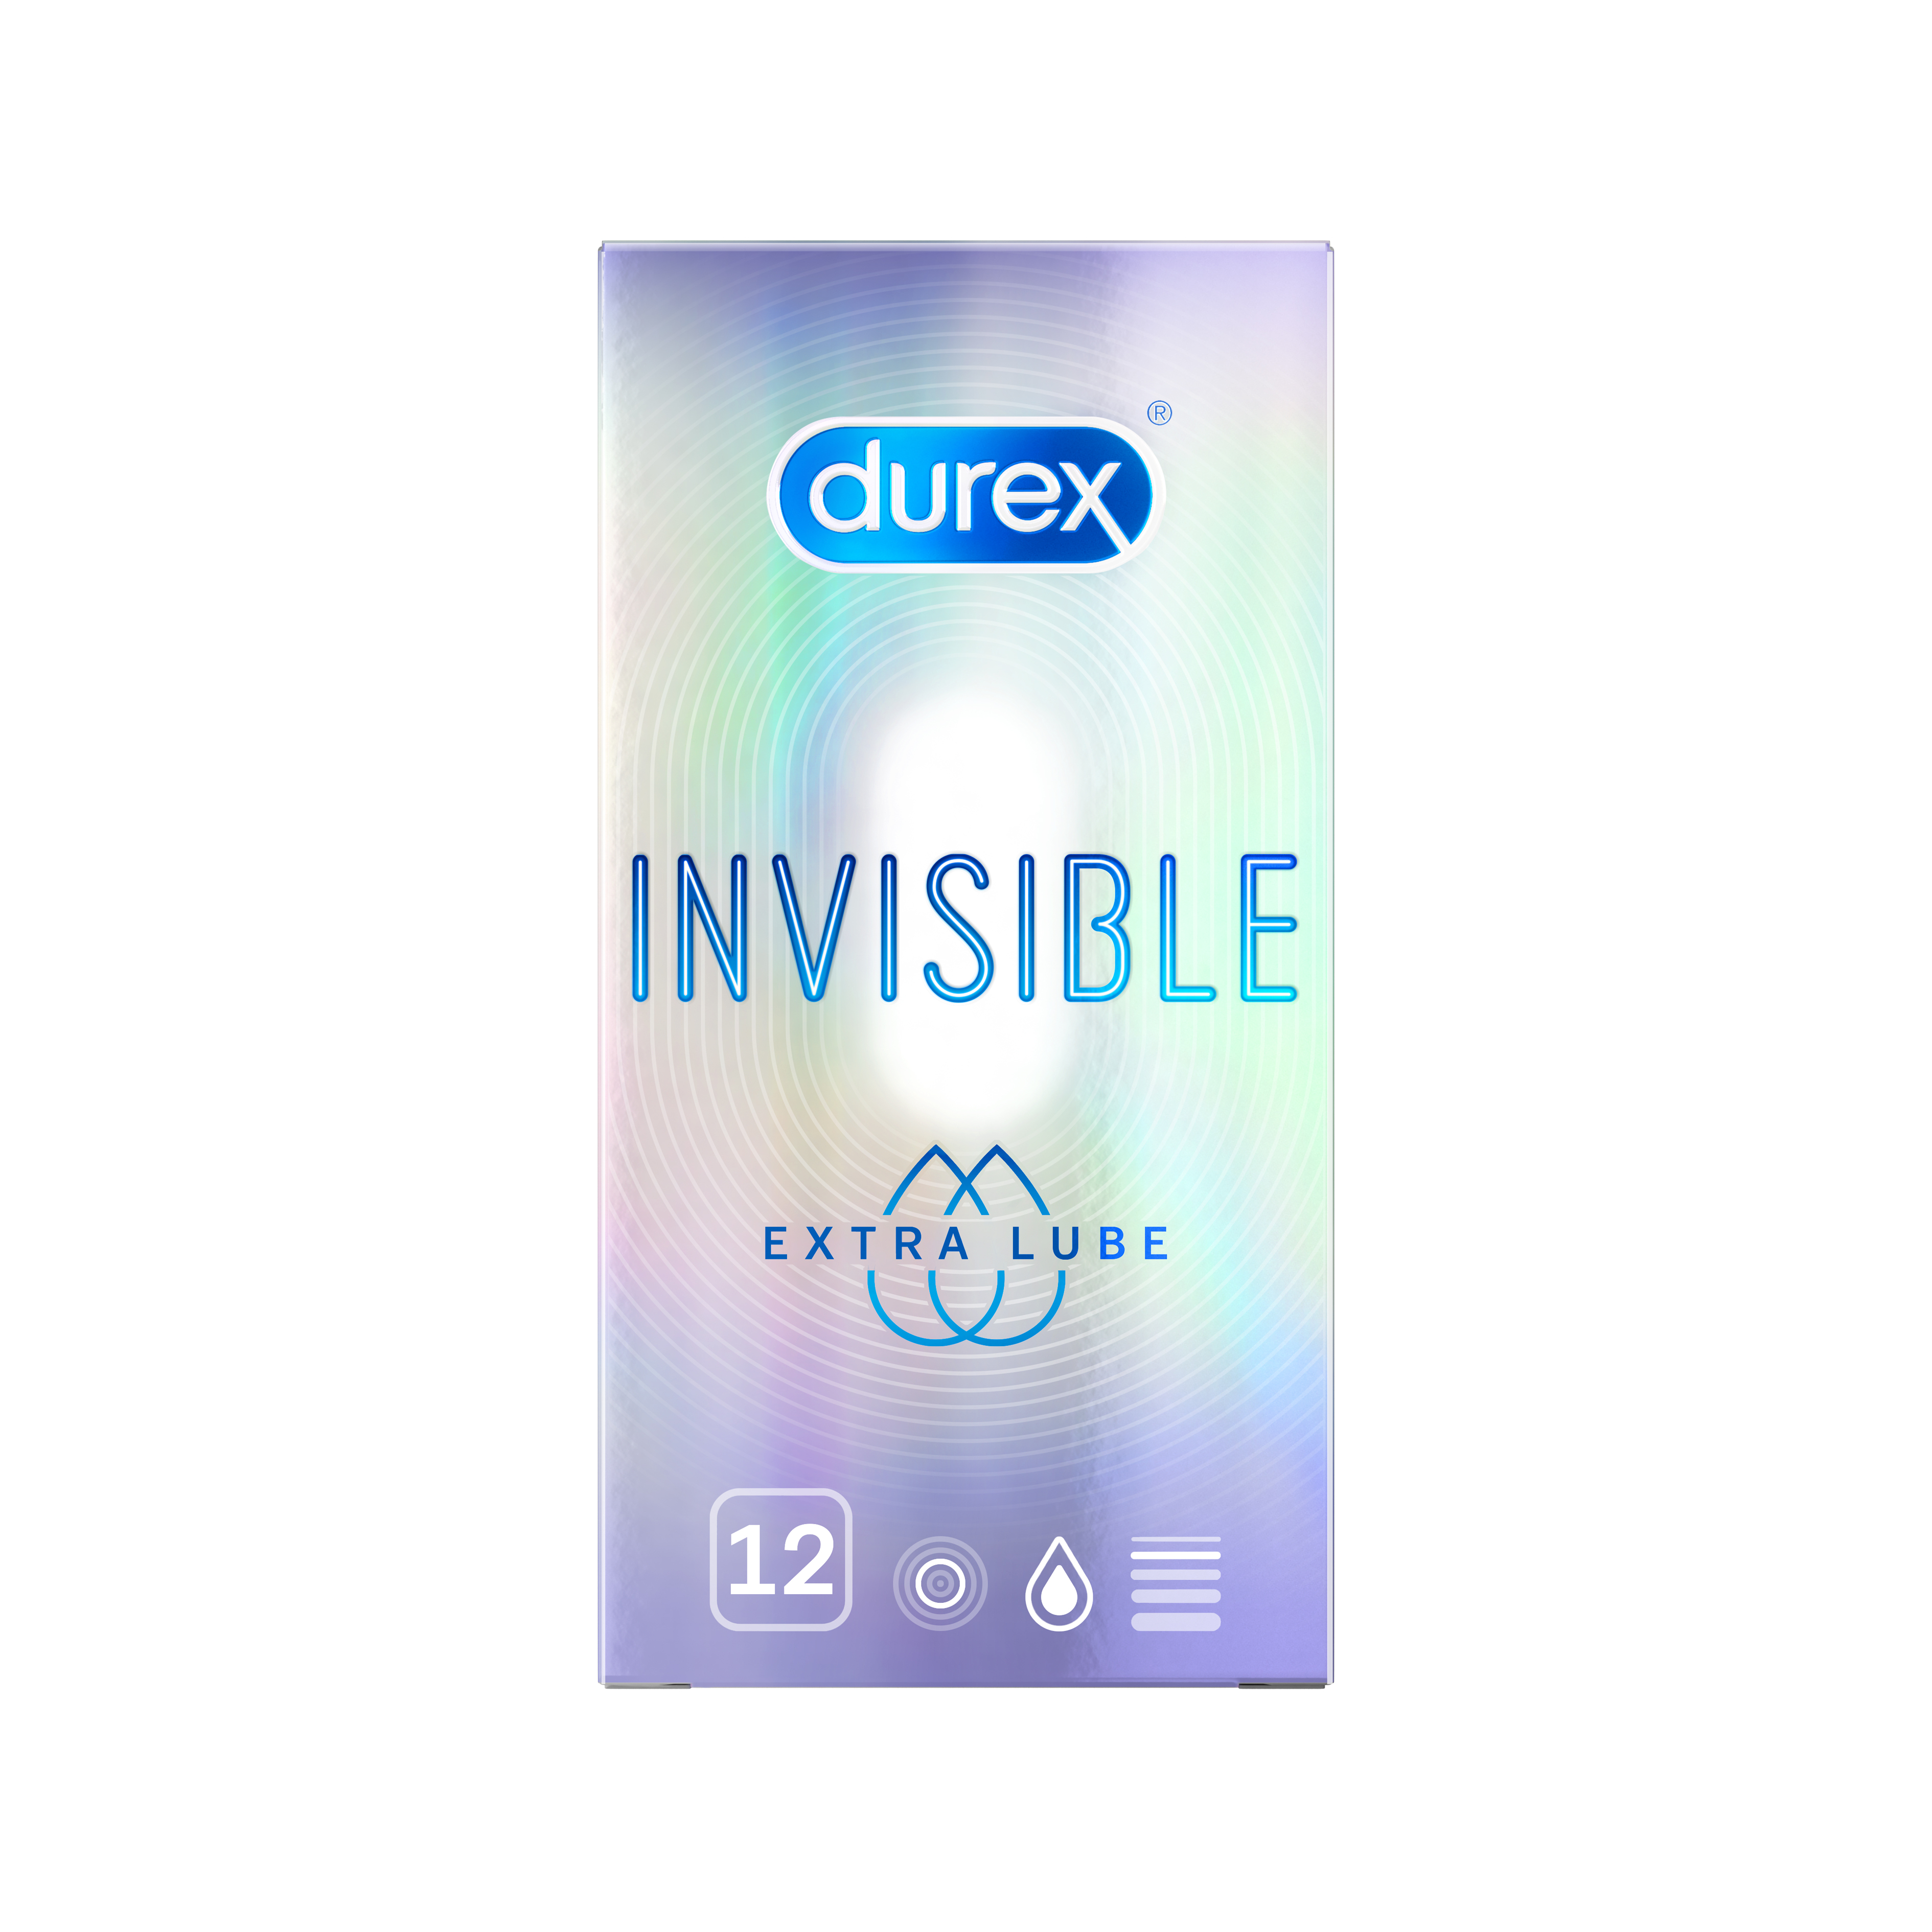 Дюрекс презервативы №12 инвизибл Extra Lube